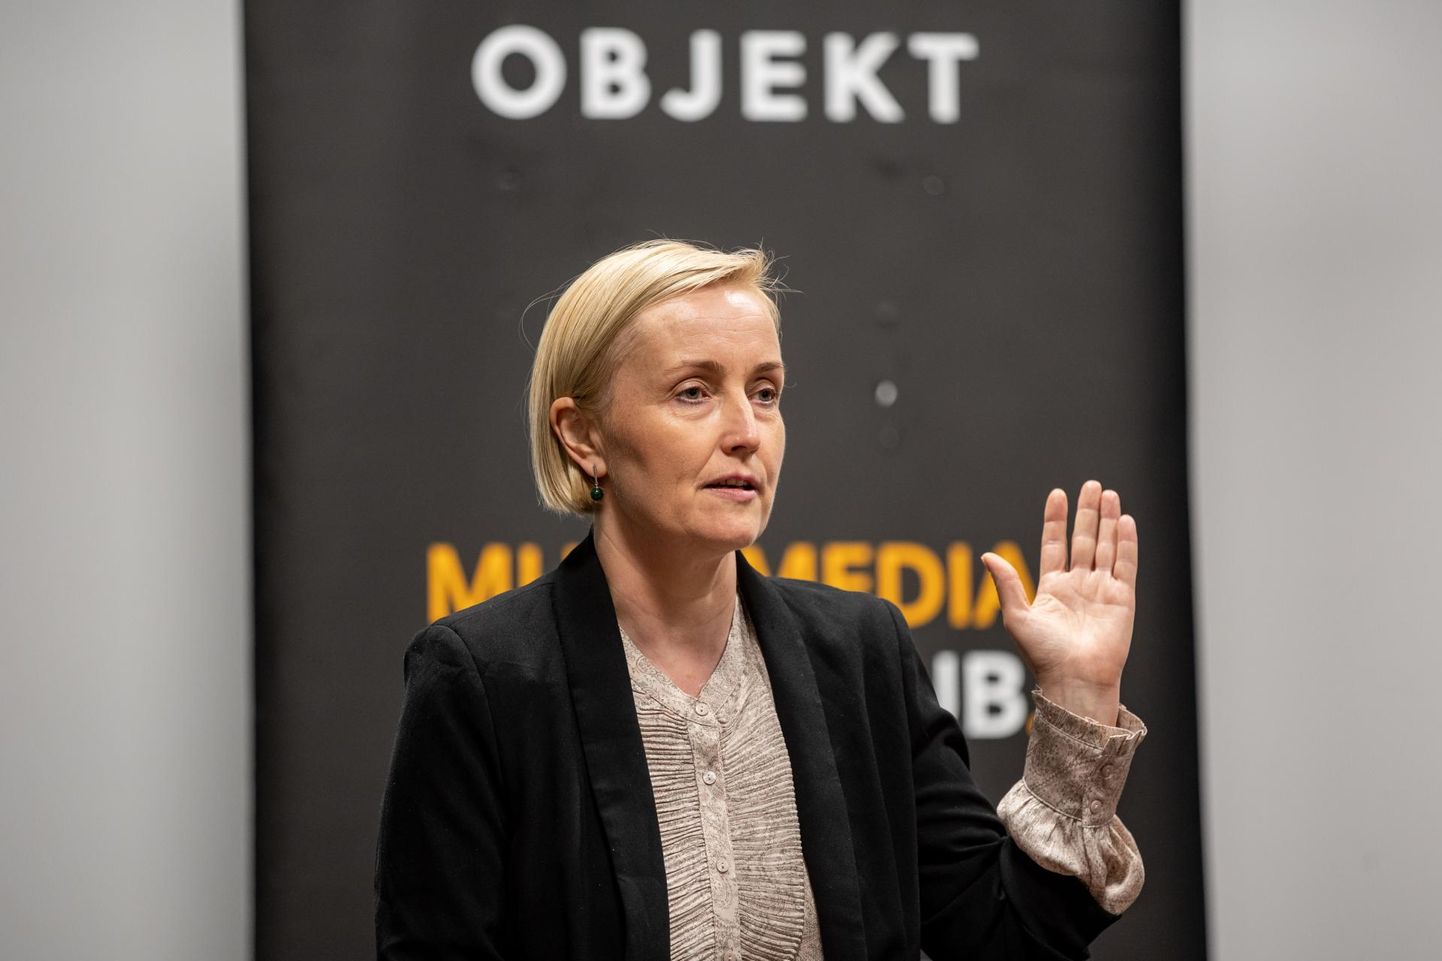 Haridusminister Kristina Kallas Narvas.